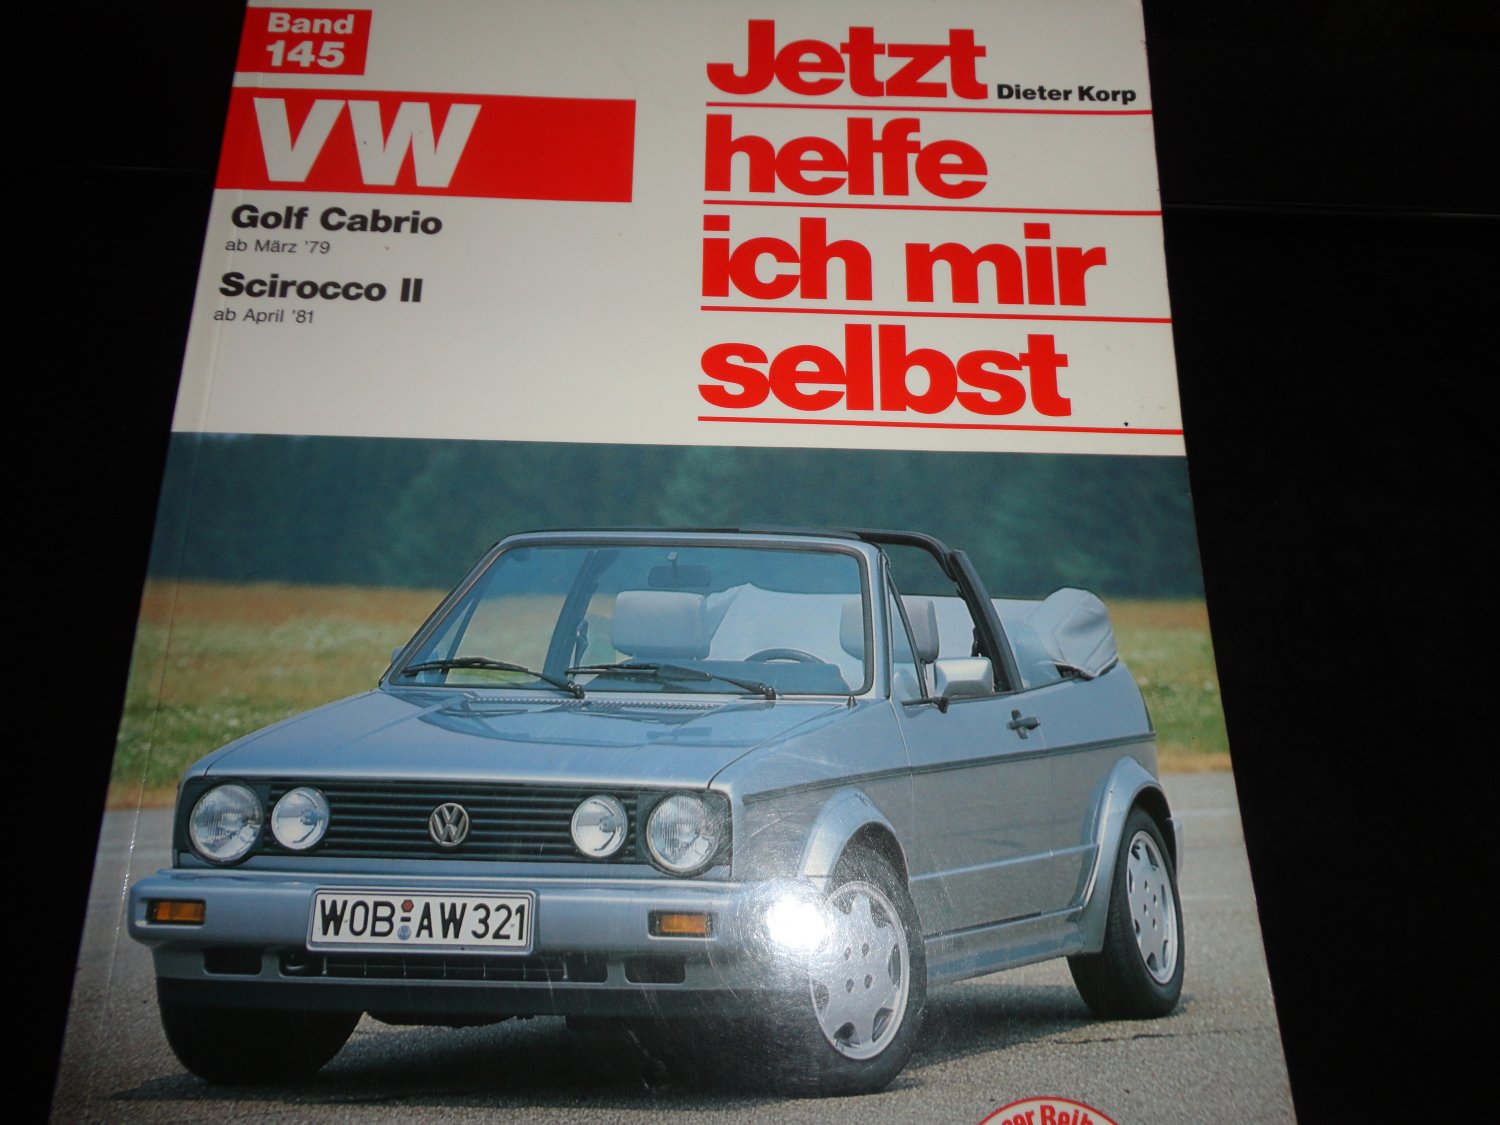 Tuning VW Golf II & III Jetzt helfe ich mir selbst Dieter Korp